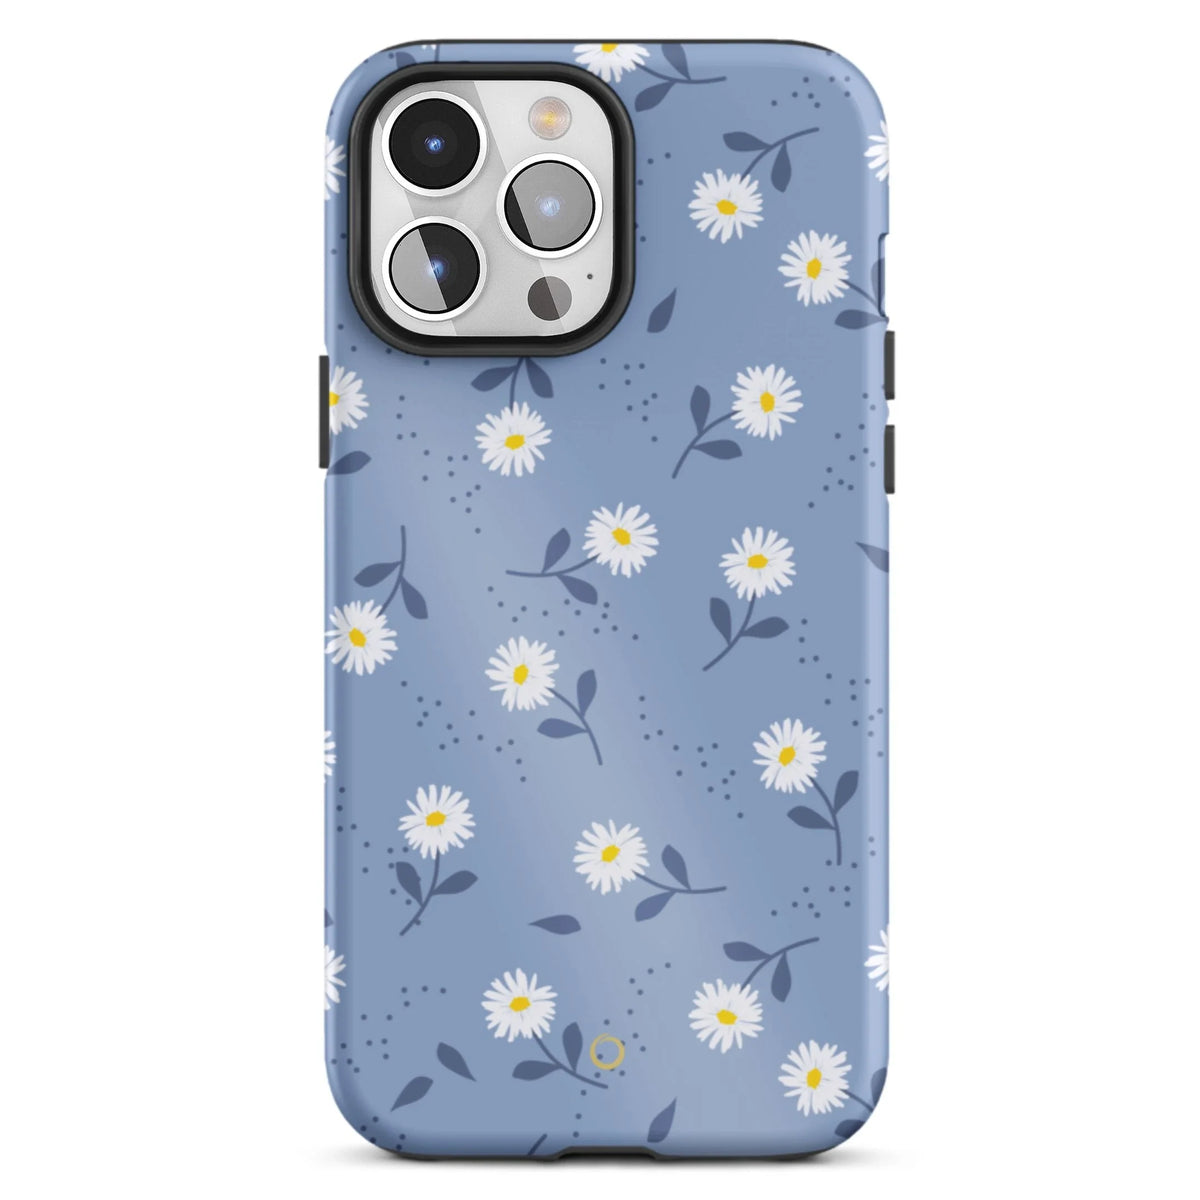 Daisy Dream iPhone Case - iPhone 11 Pro Max